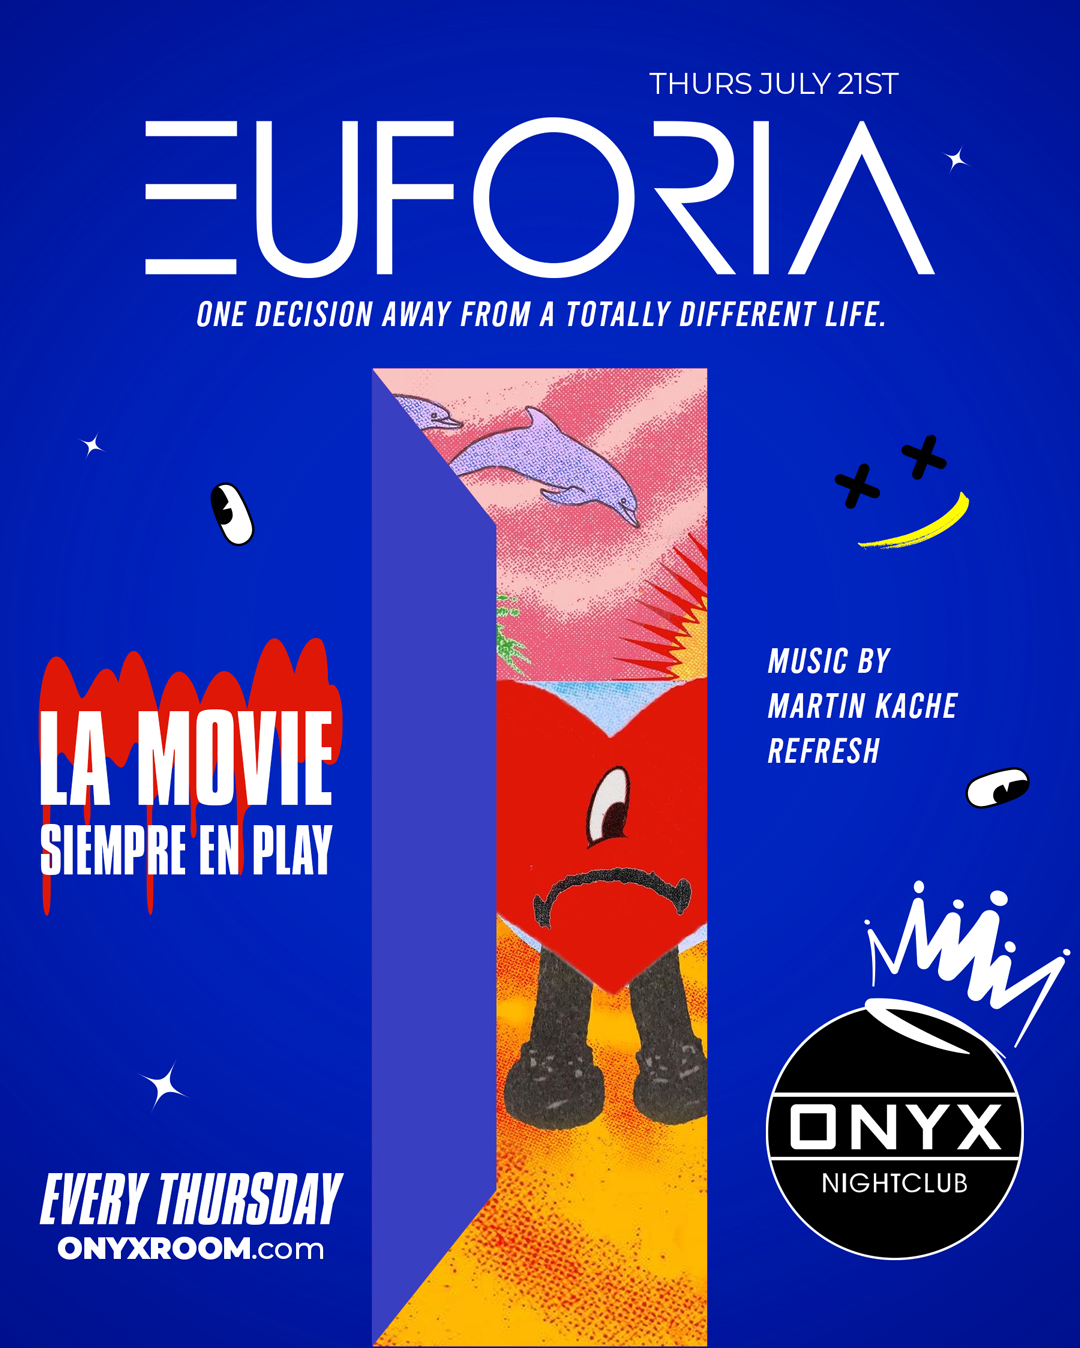 Euforia Thursdays is Launching!